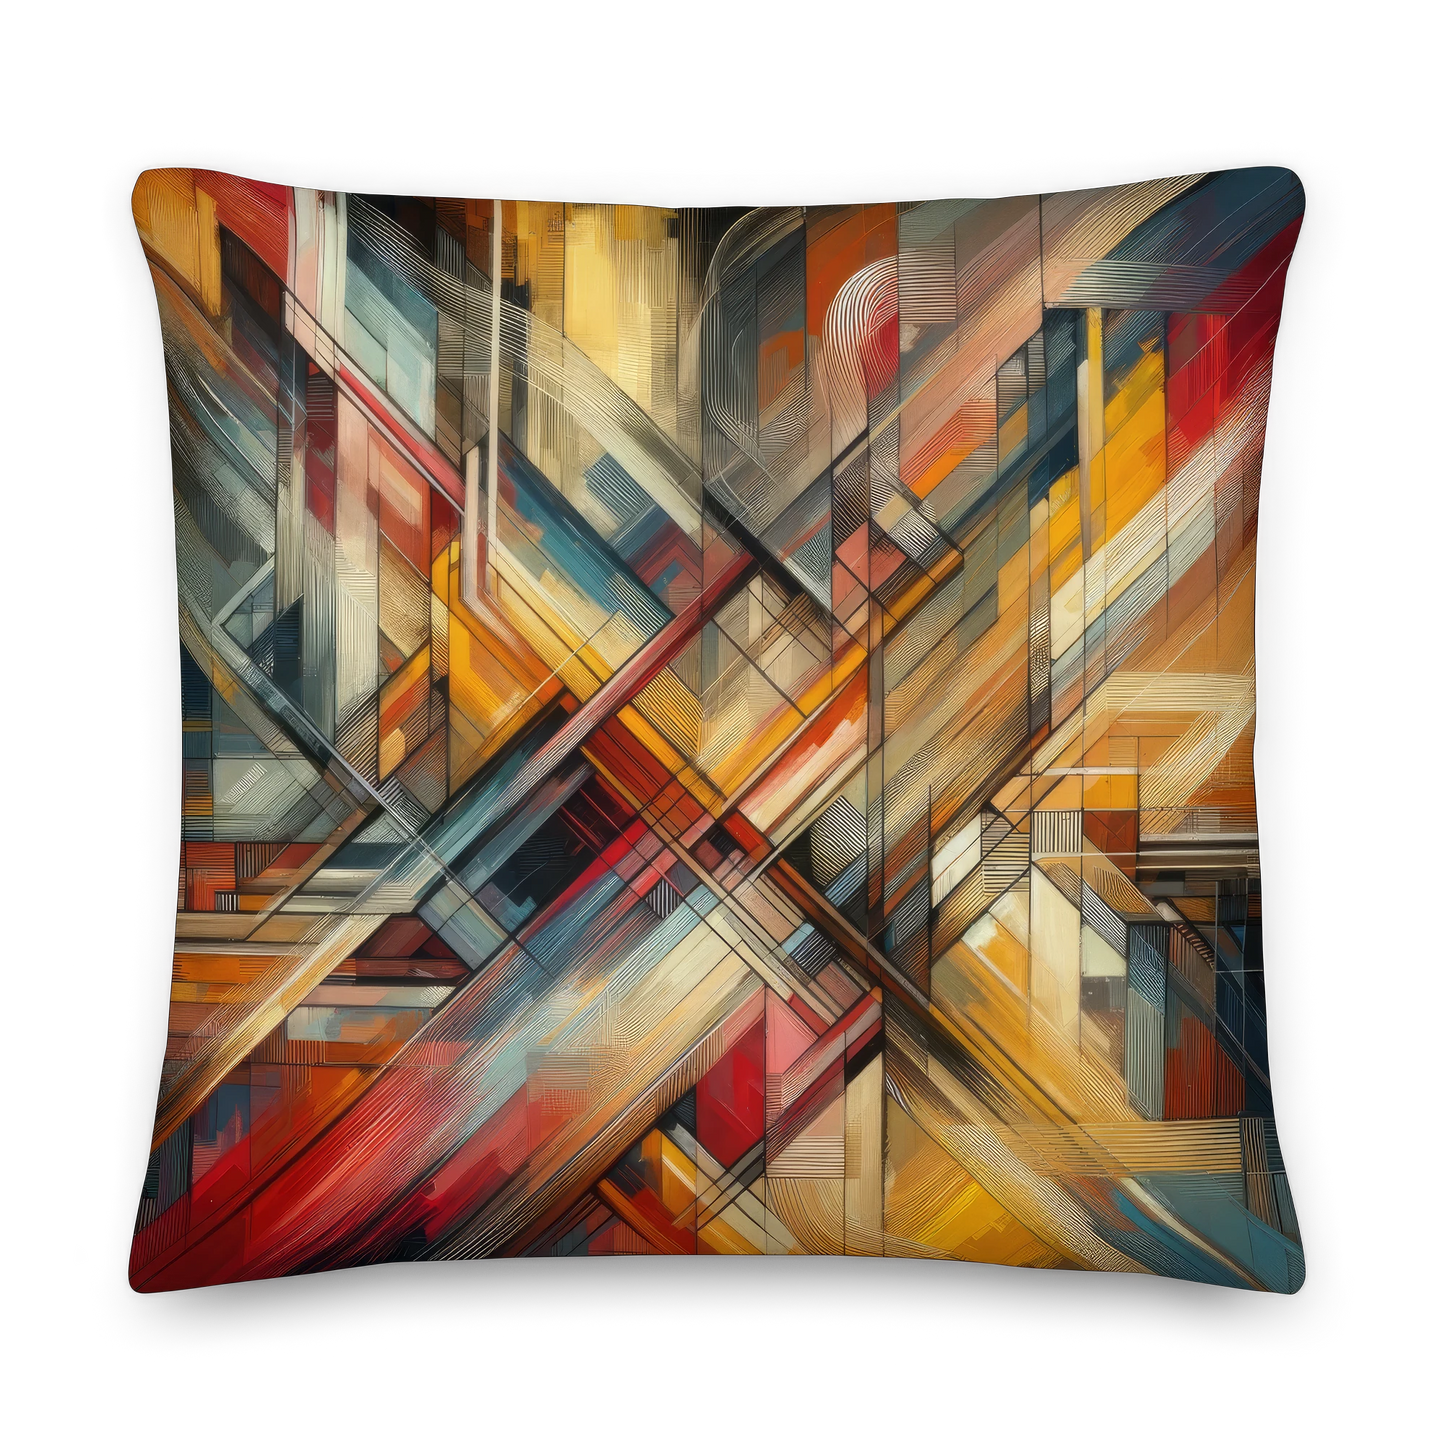 Abstract Art Pillow: Adaptive Insights